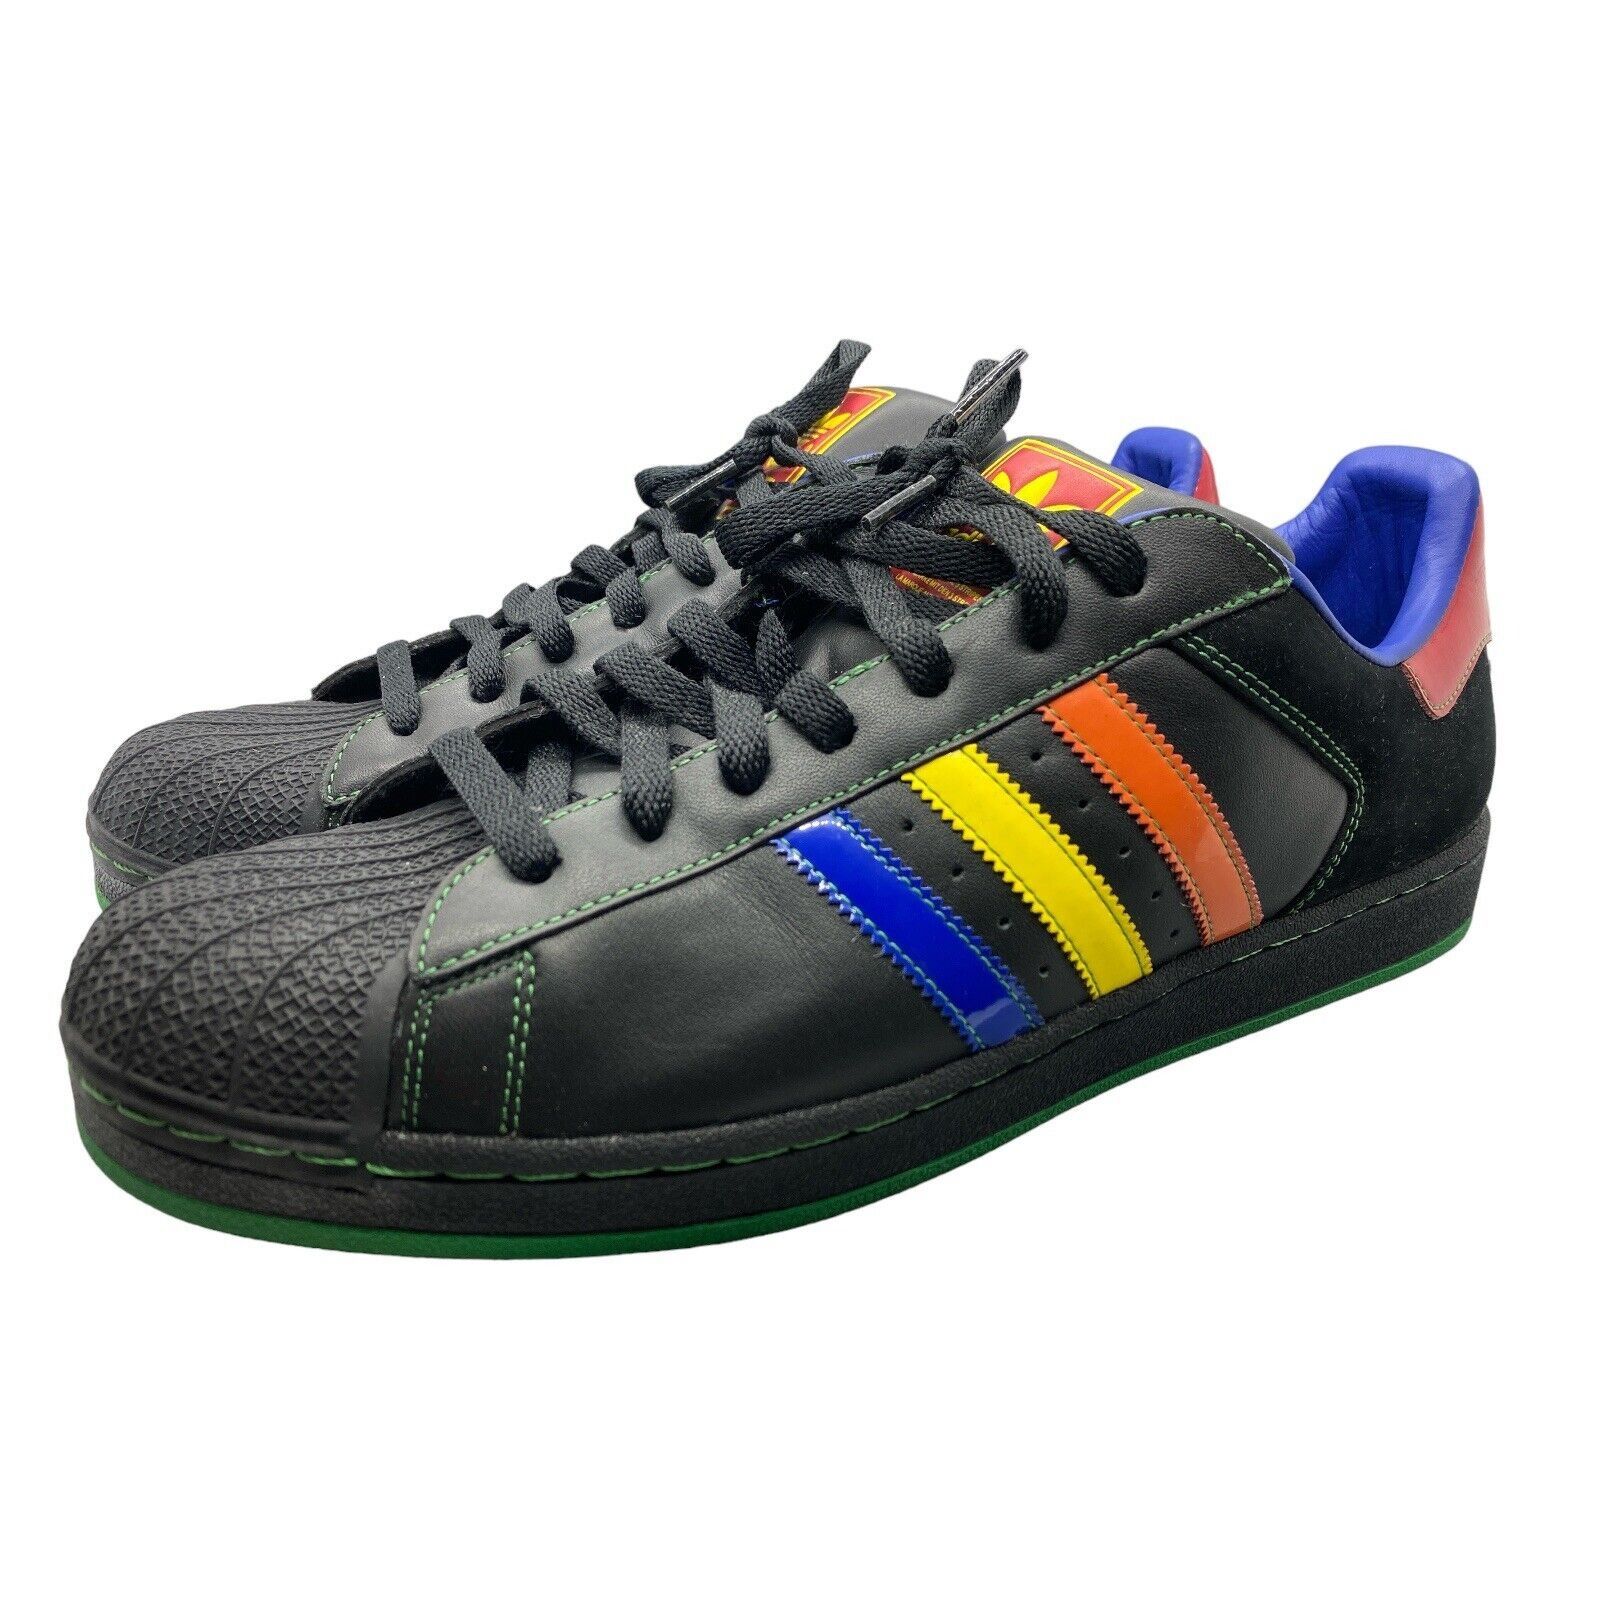 Adidas ADIDAS Original Superstar 2 II CB Black Shell Mens Sneakers Size US 13 / EU 46 - 4 Thumbnail